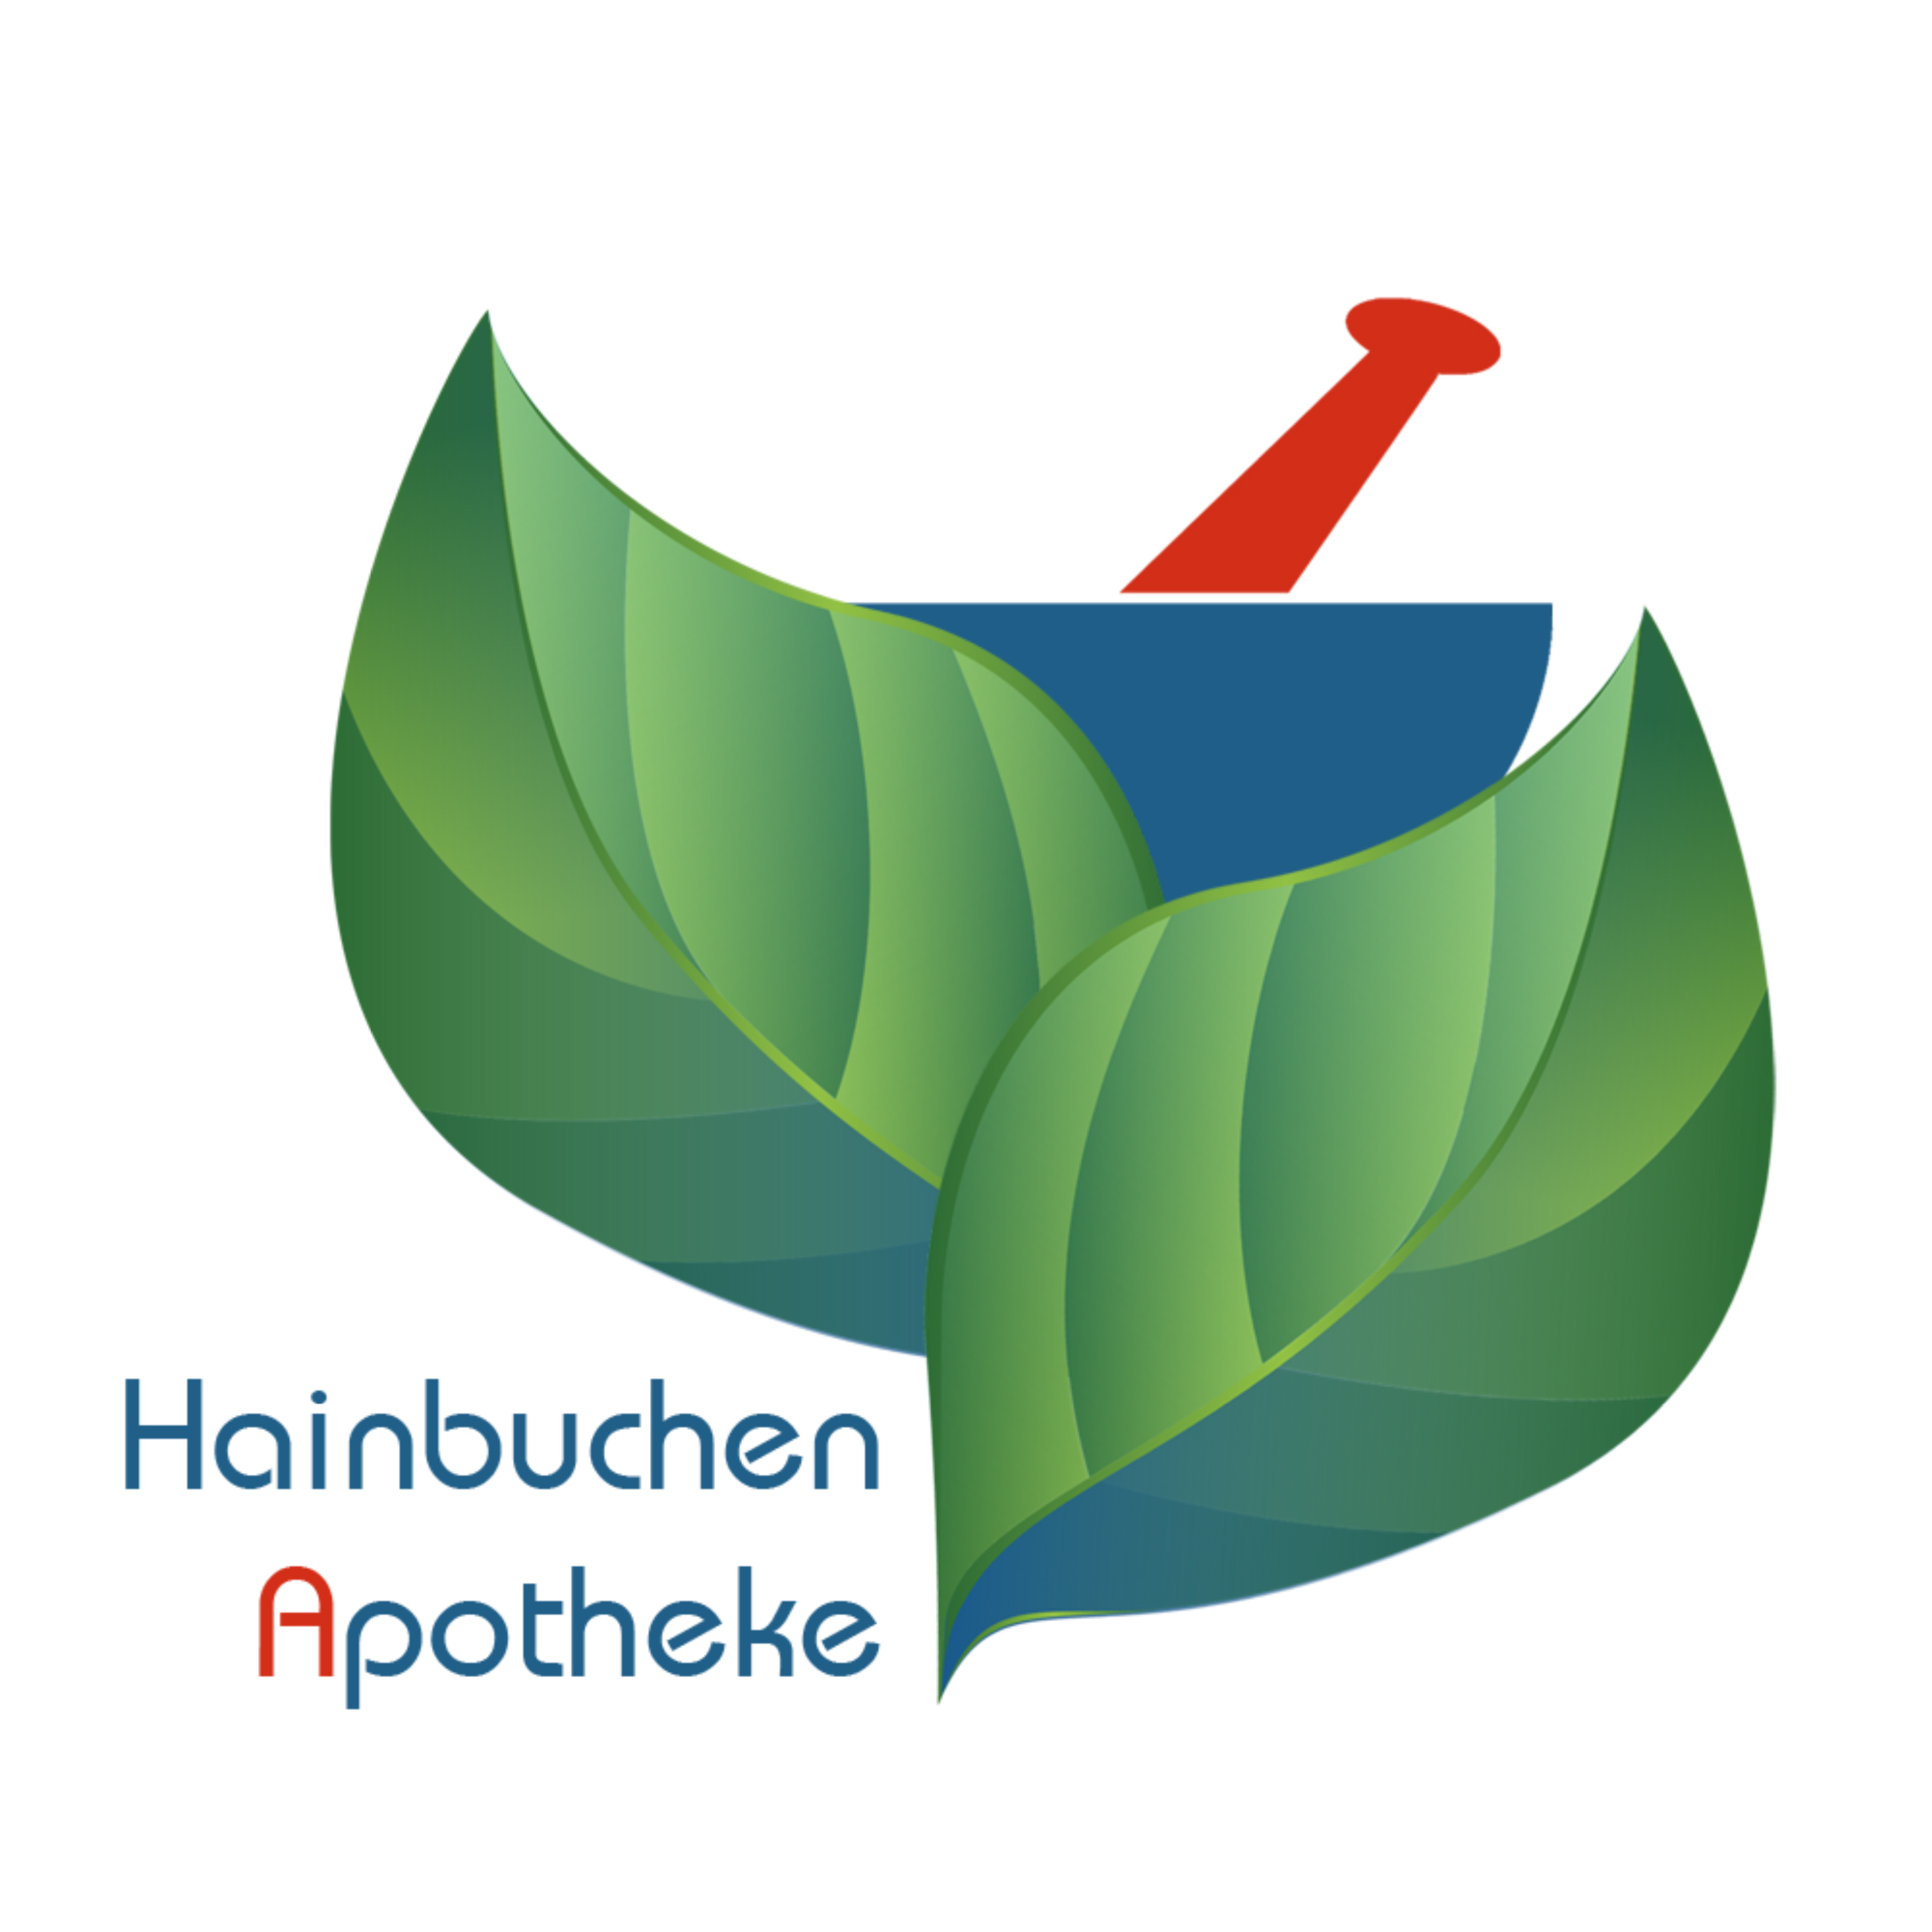 Hainbuchen-Apotheke in Leipzig - Logo